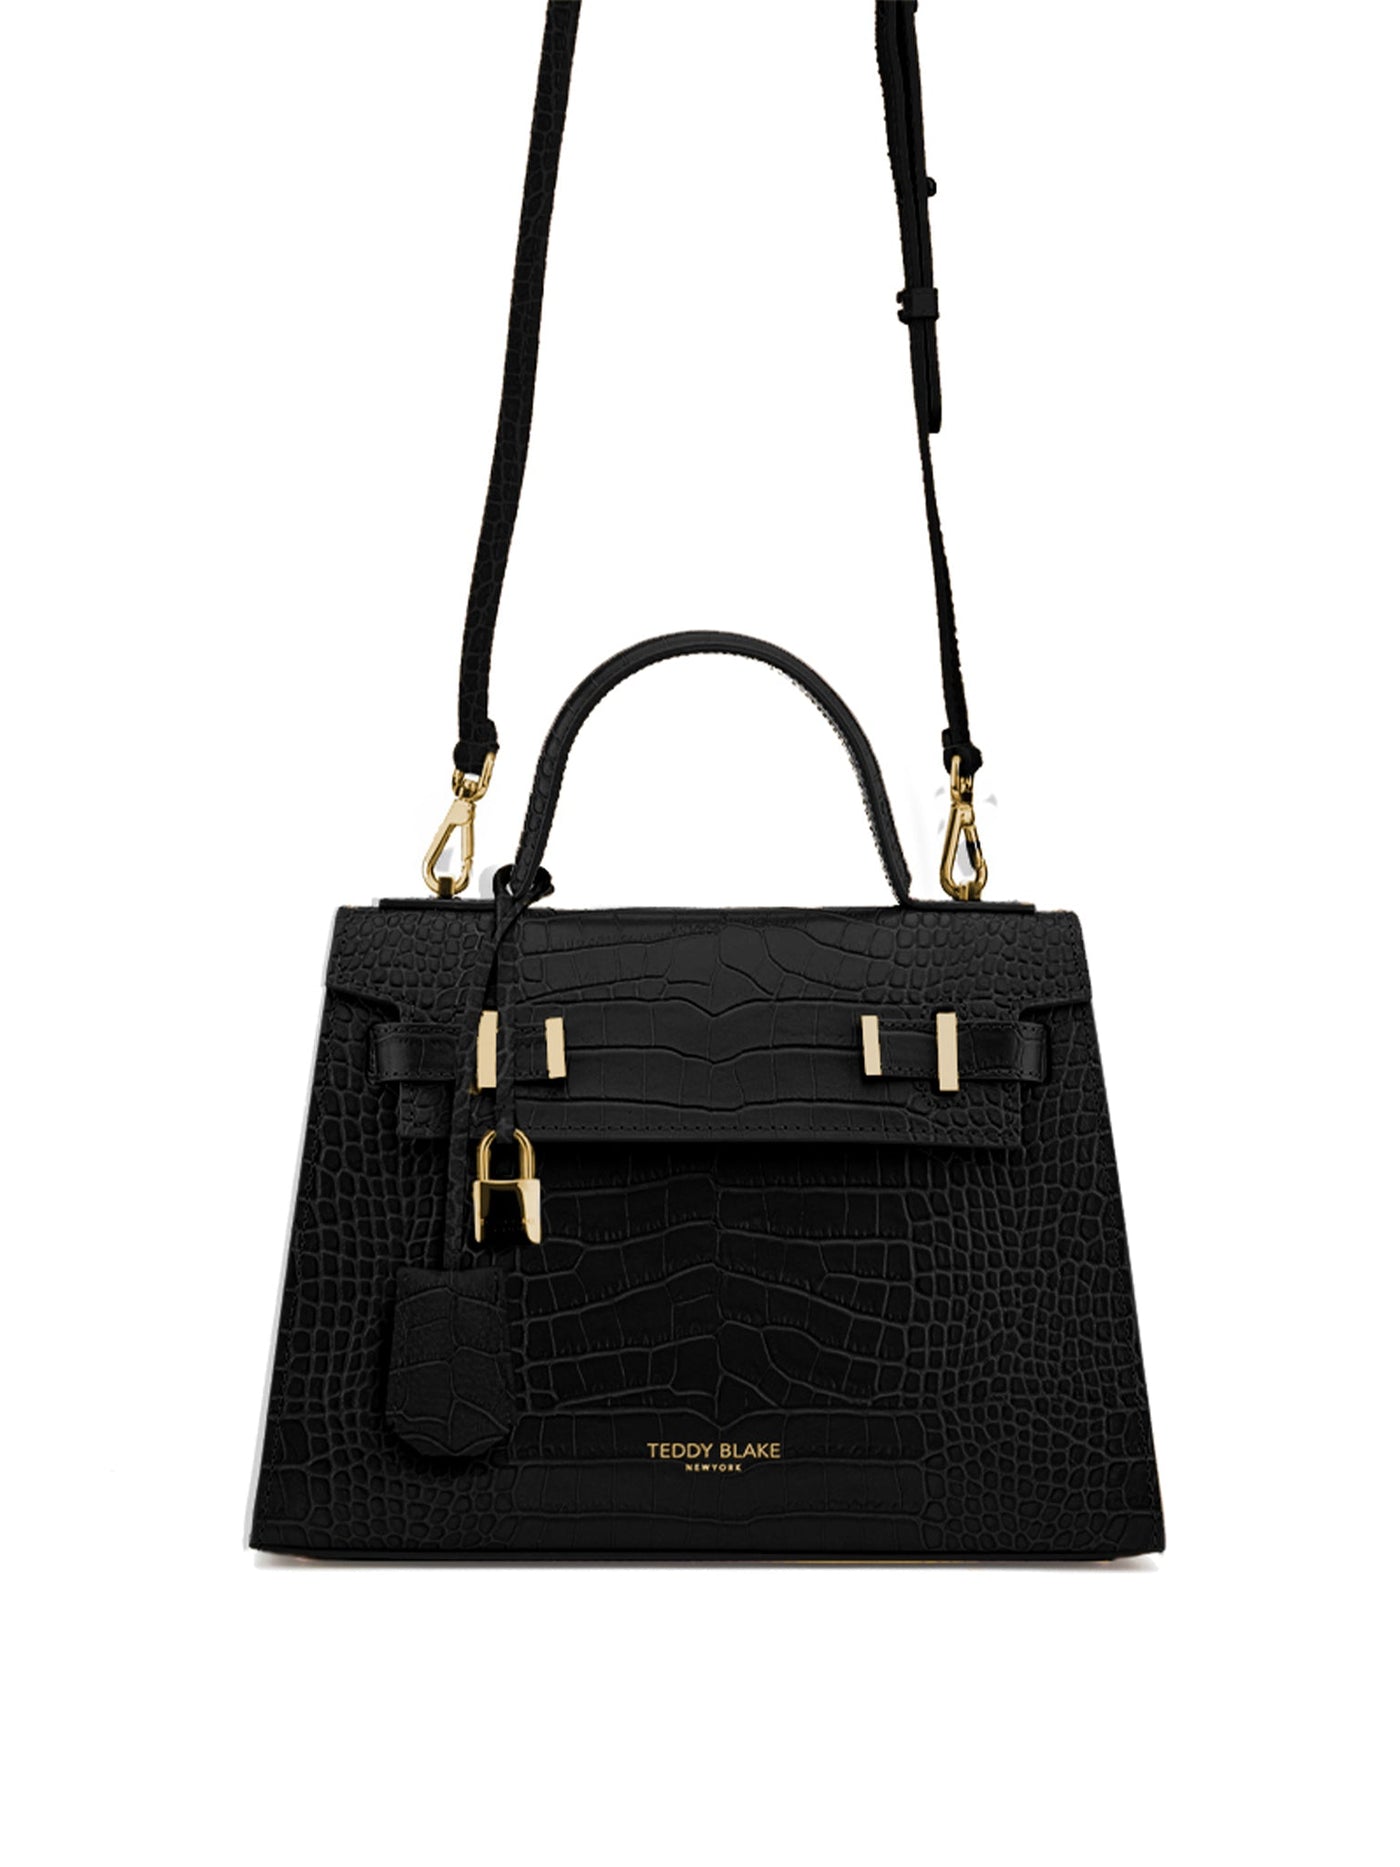 besto v, Bags, Besto V Purse Handbag Navy Blue Black Top Handle Gold Tone  Hardware New